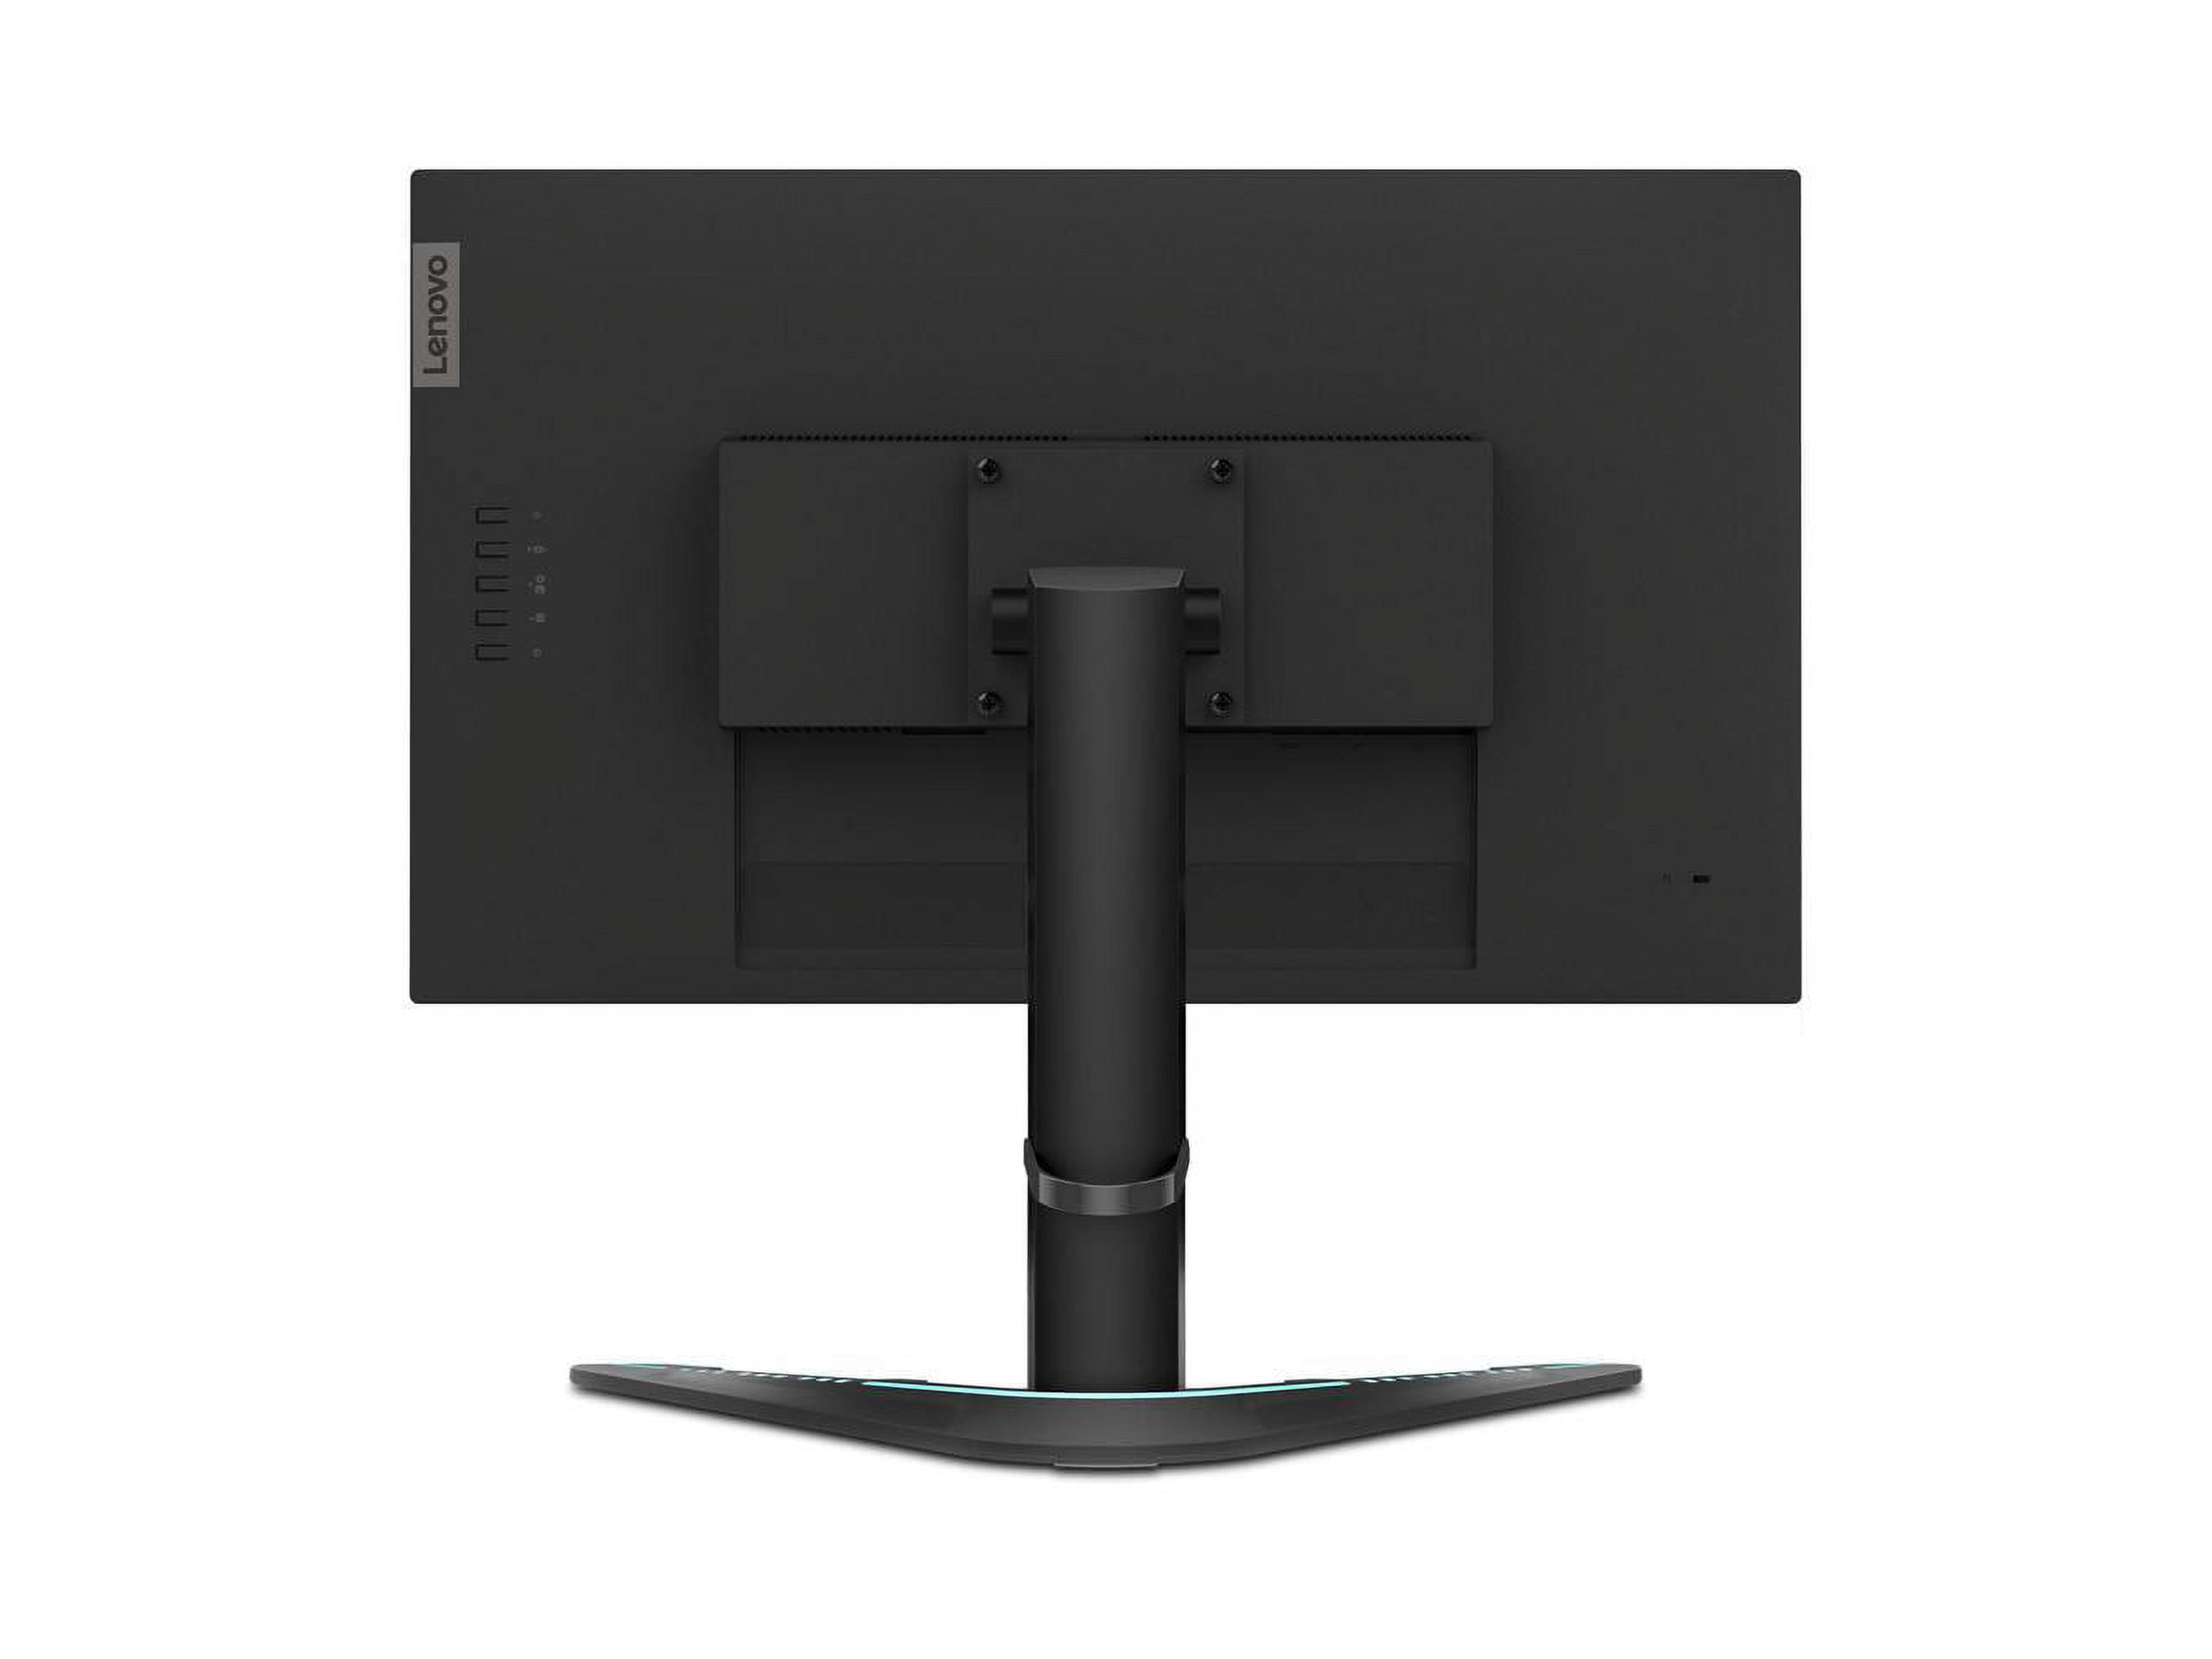 Shop Lenovo 1440p 144hz gaming monitor